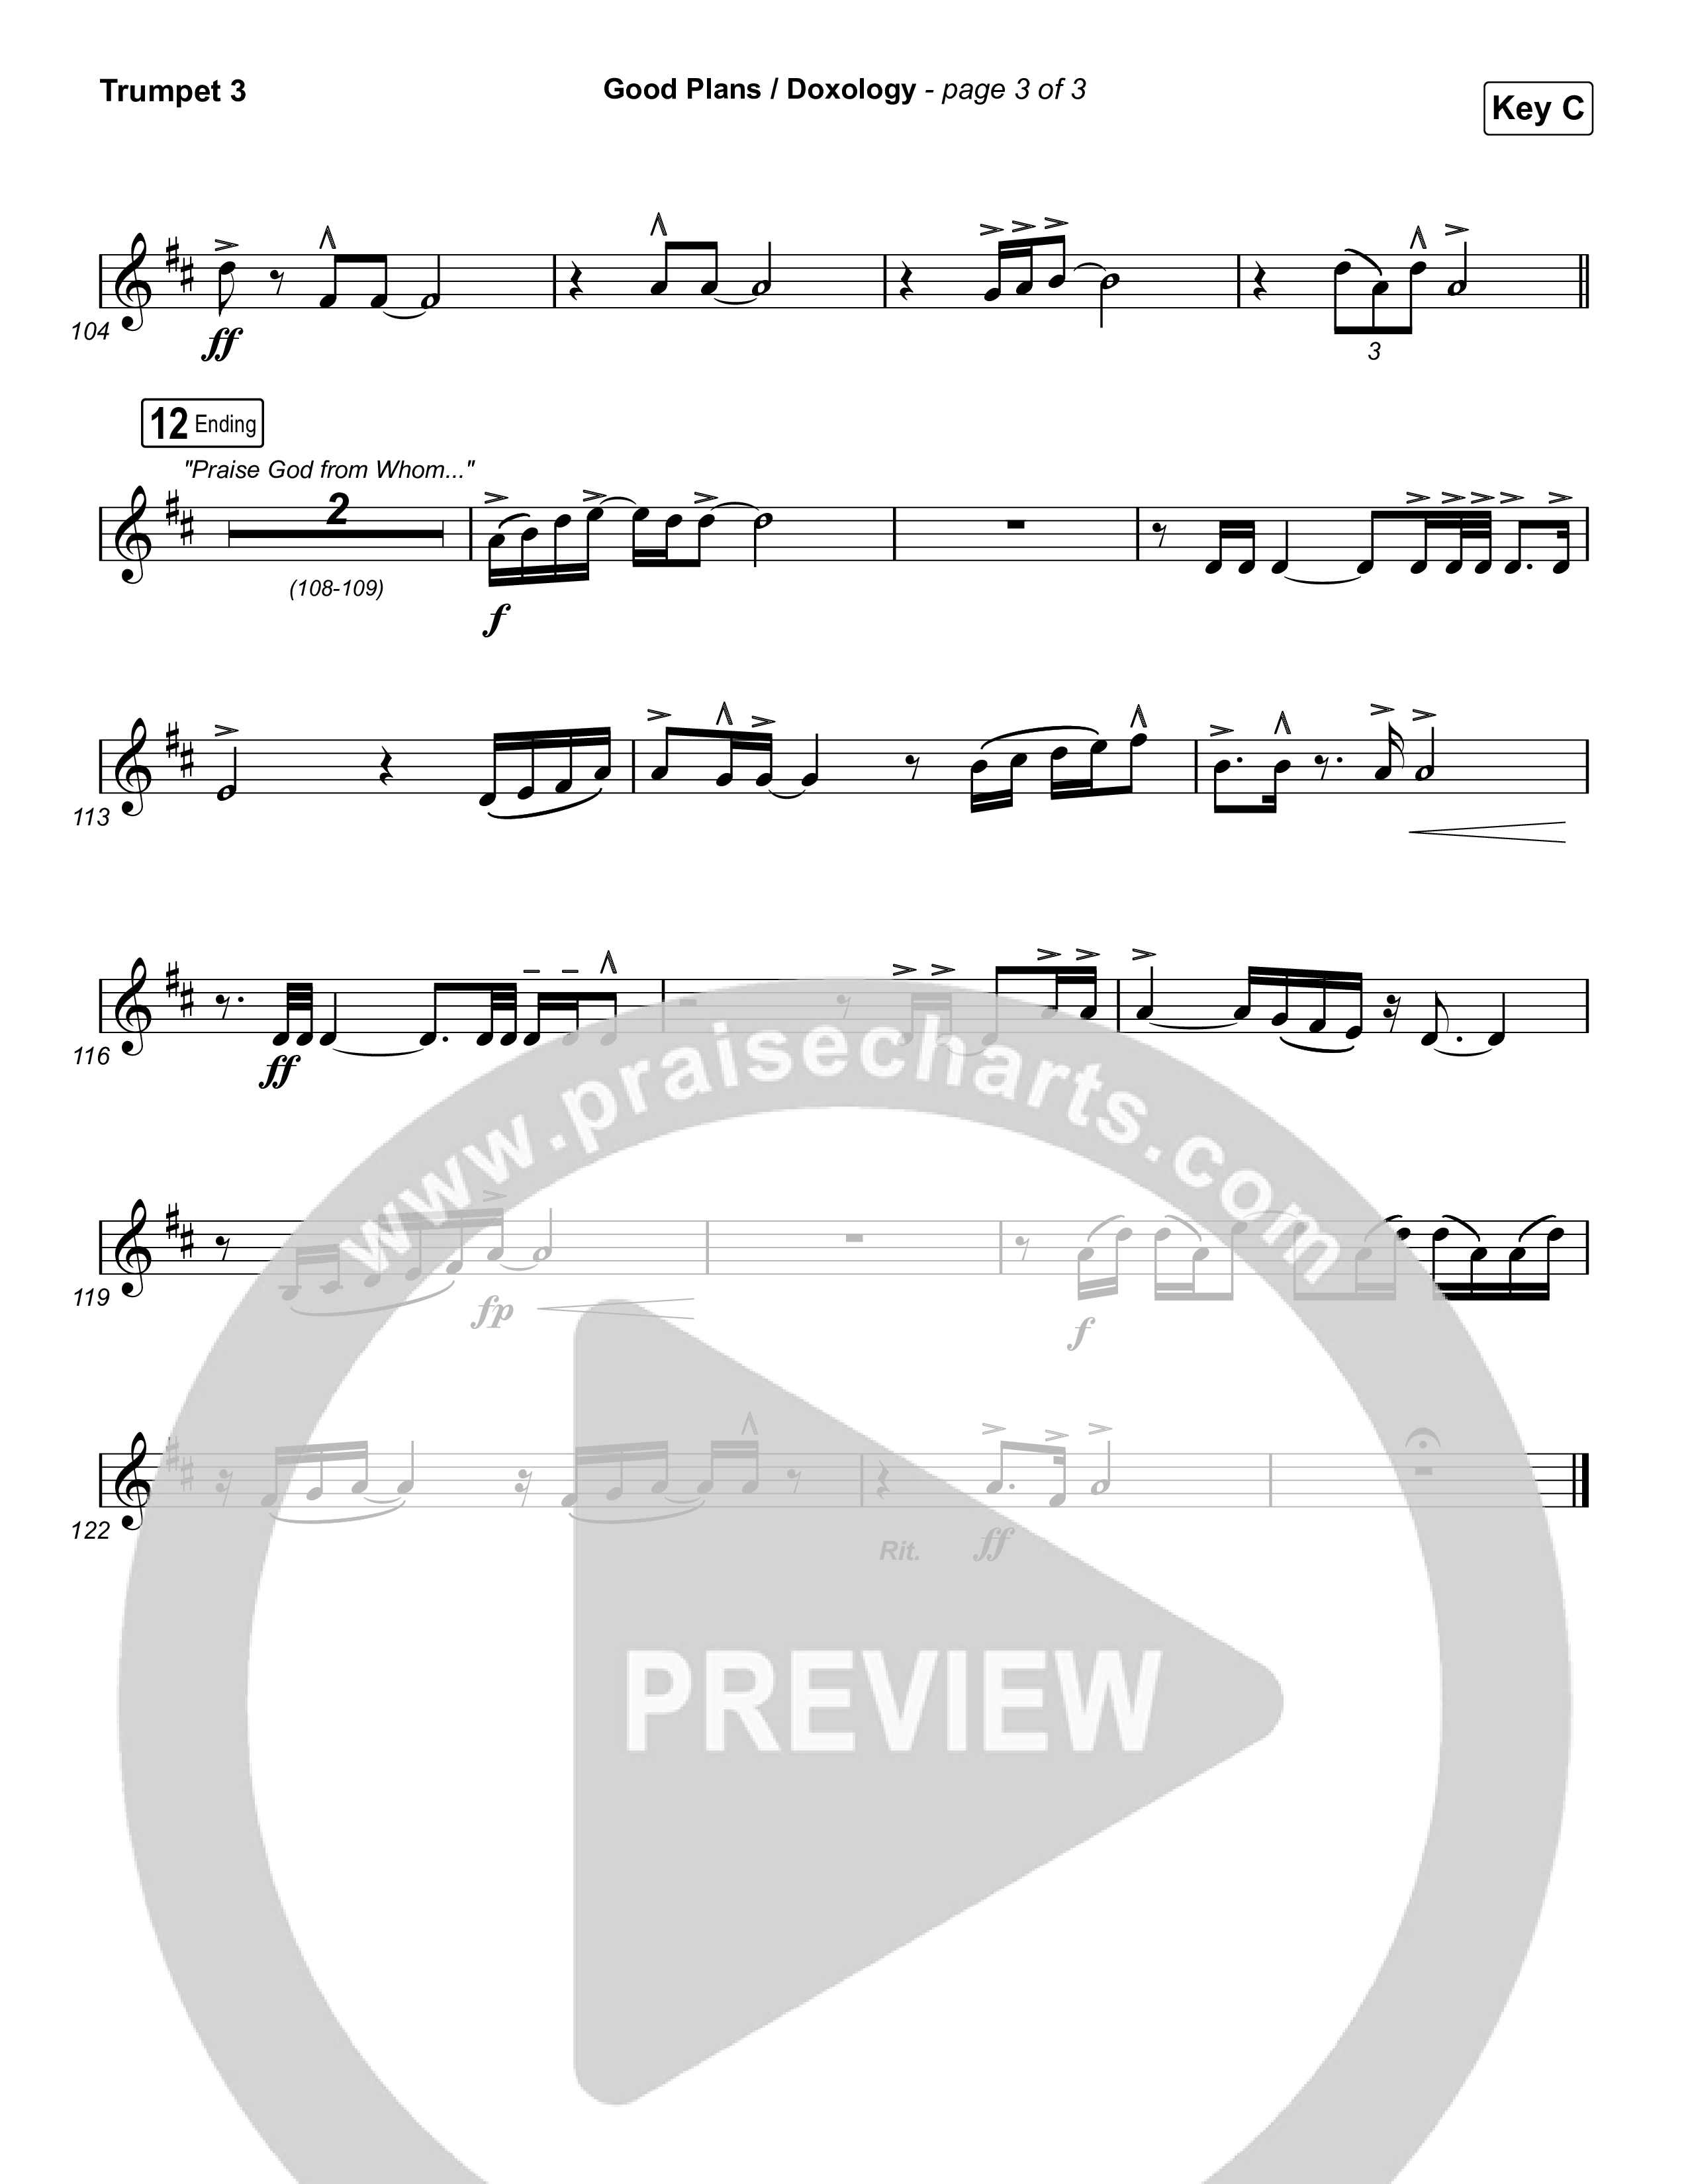 Good Plans/Doxology Trumpet 3 (Red Rocks Worship)